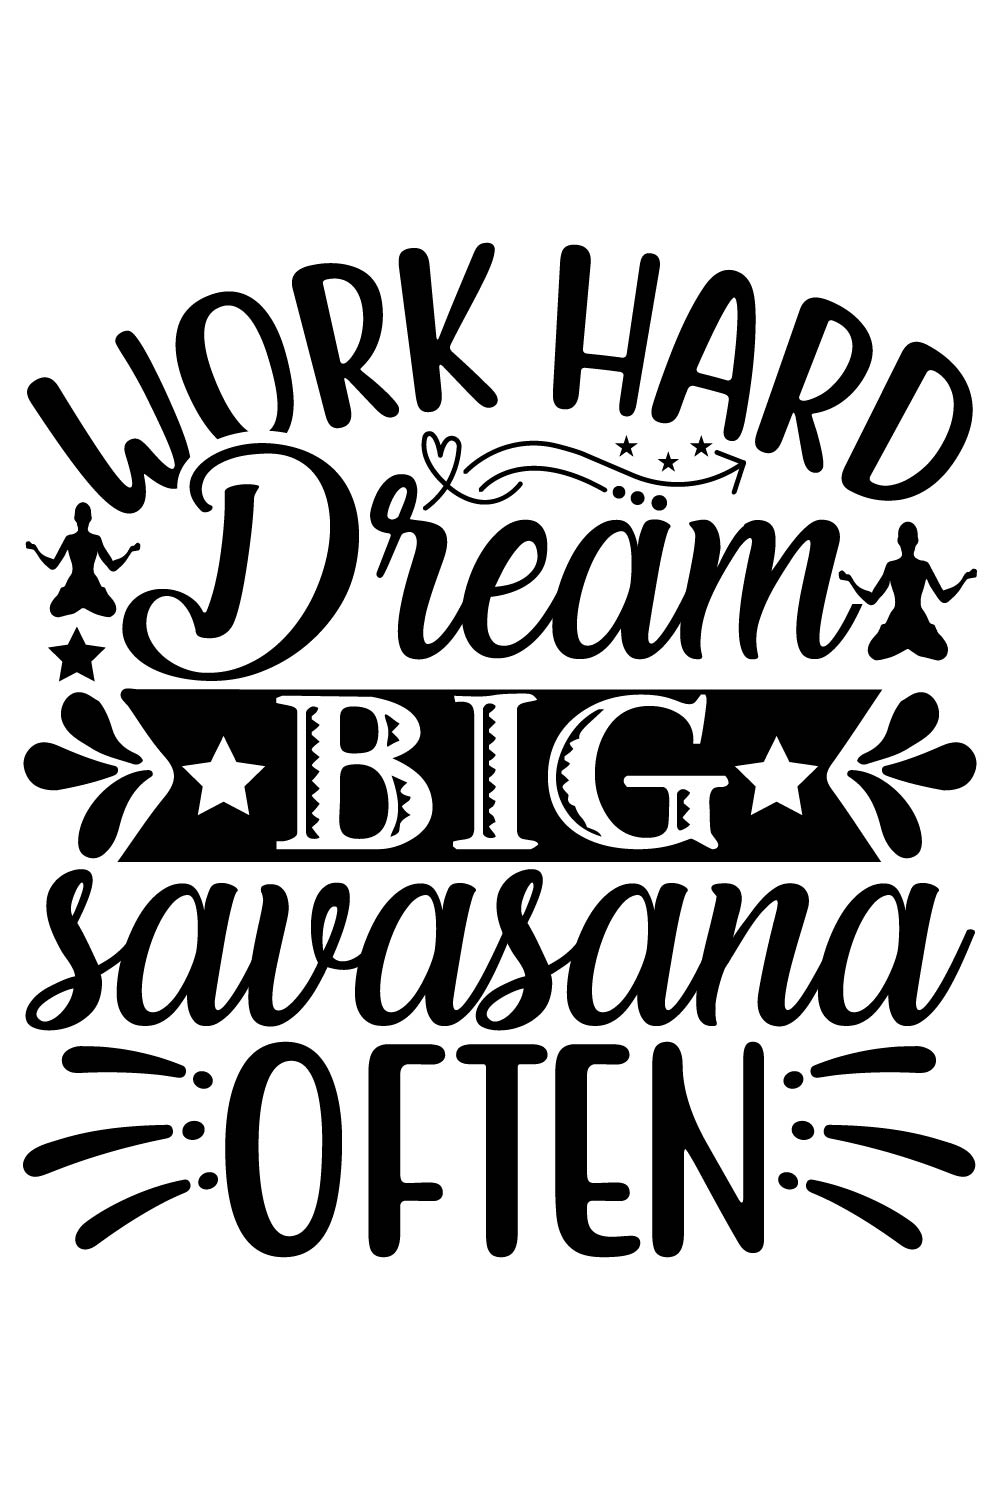 Image with irresistible inscription for prints Work hard dream big savasana often.